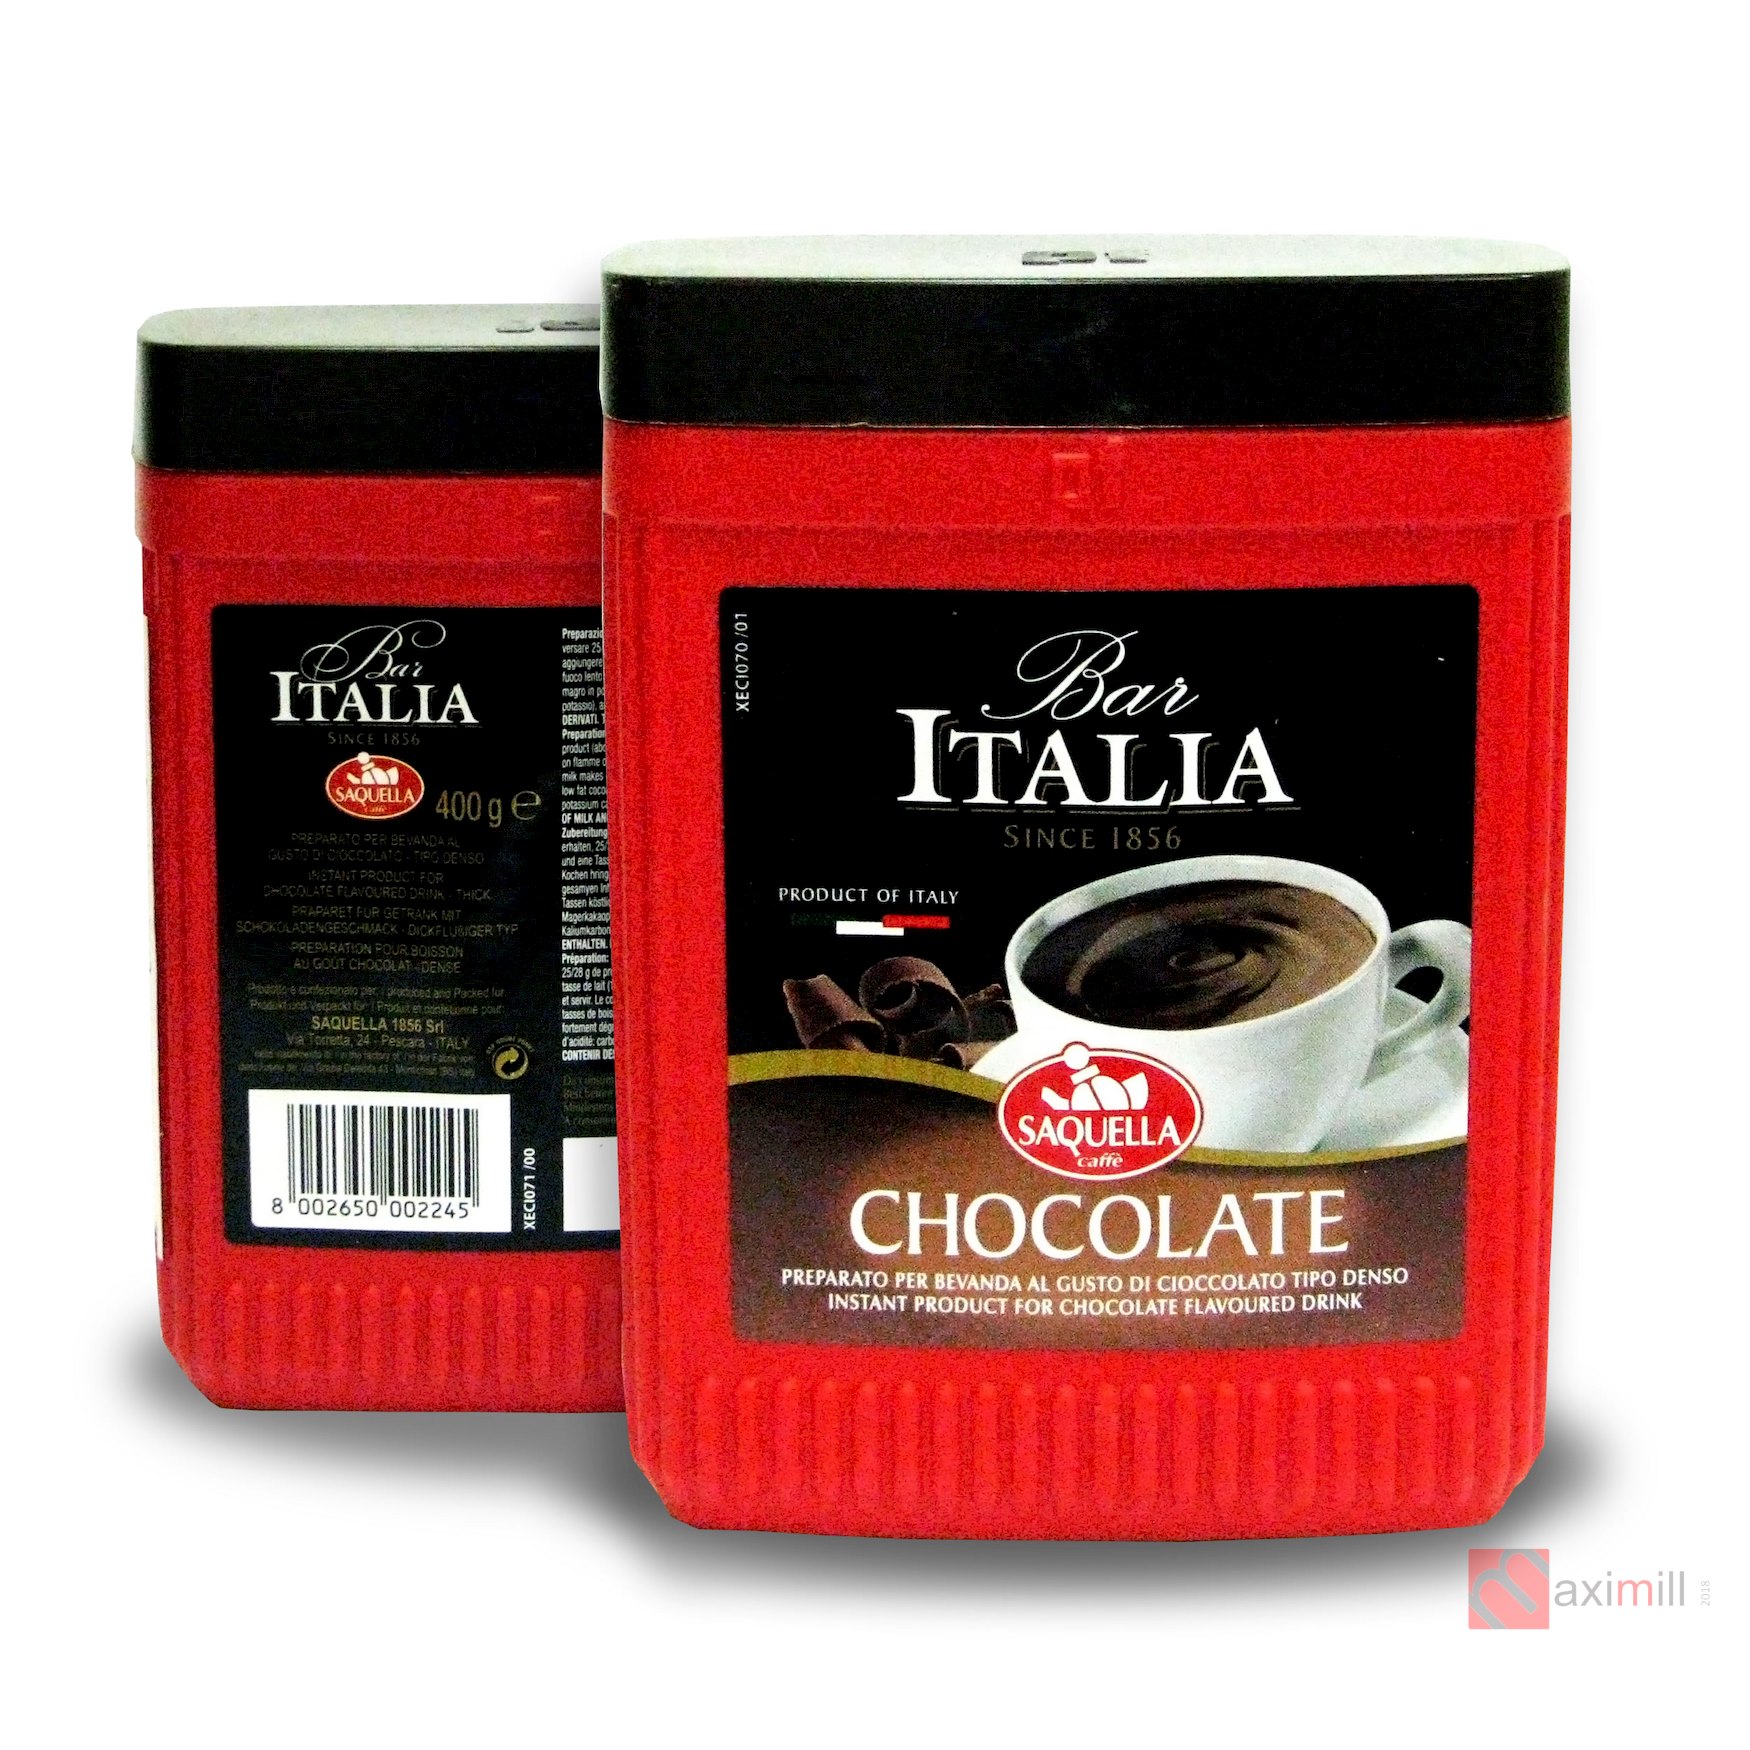 Какао Saquella BarItalia Chocolate